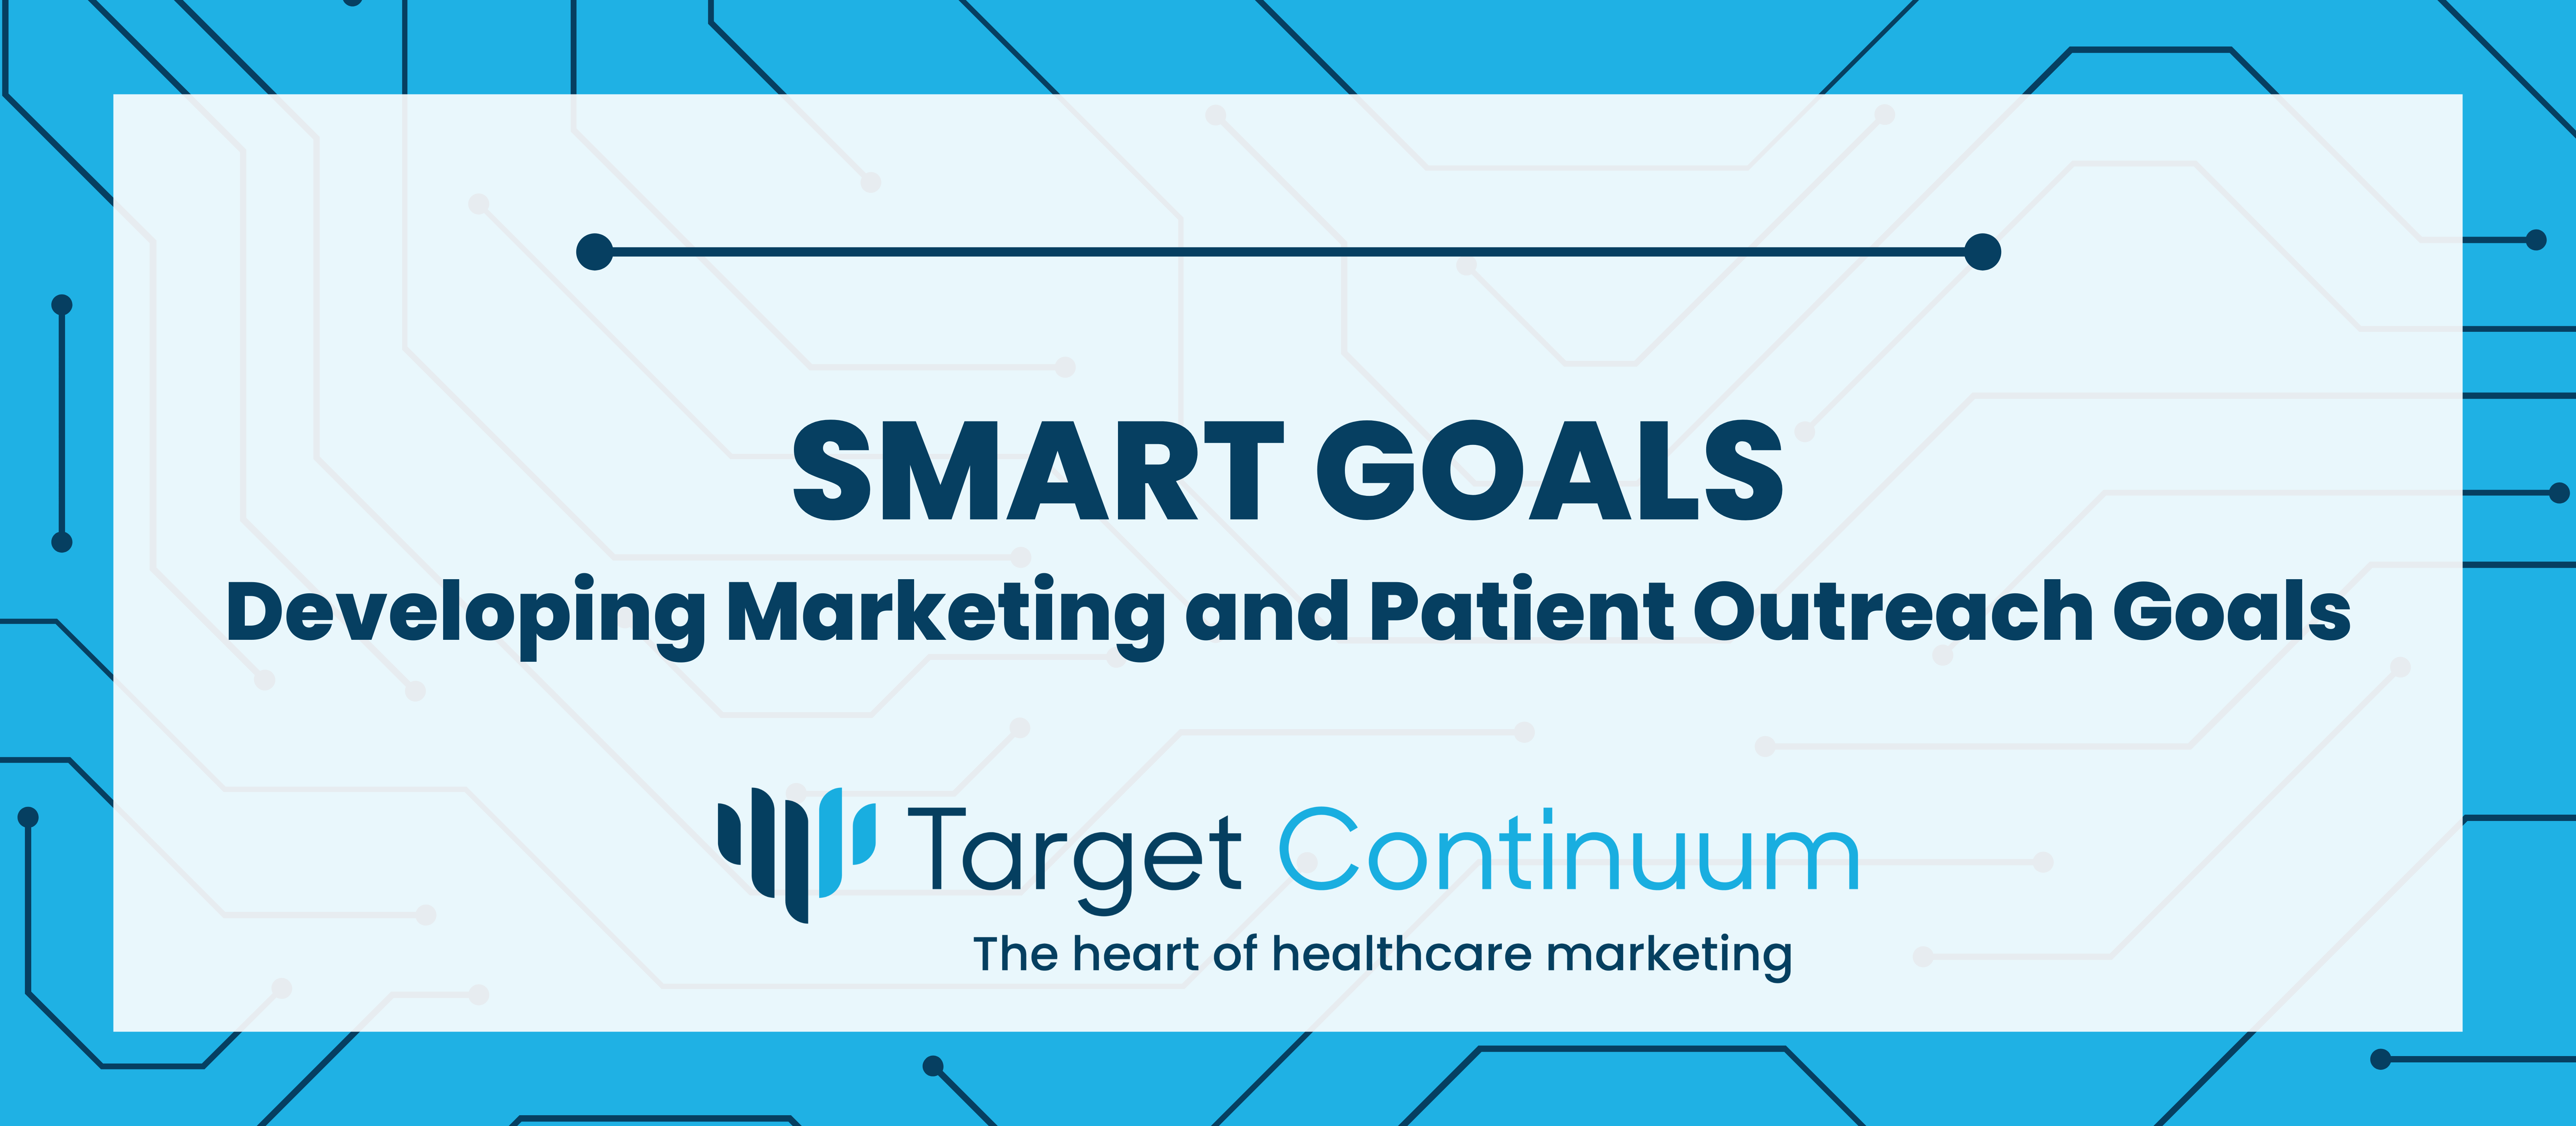 Smart Goals - Developing Marketing and Patient Outreach Goals